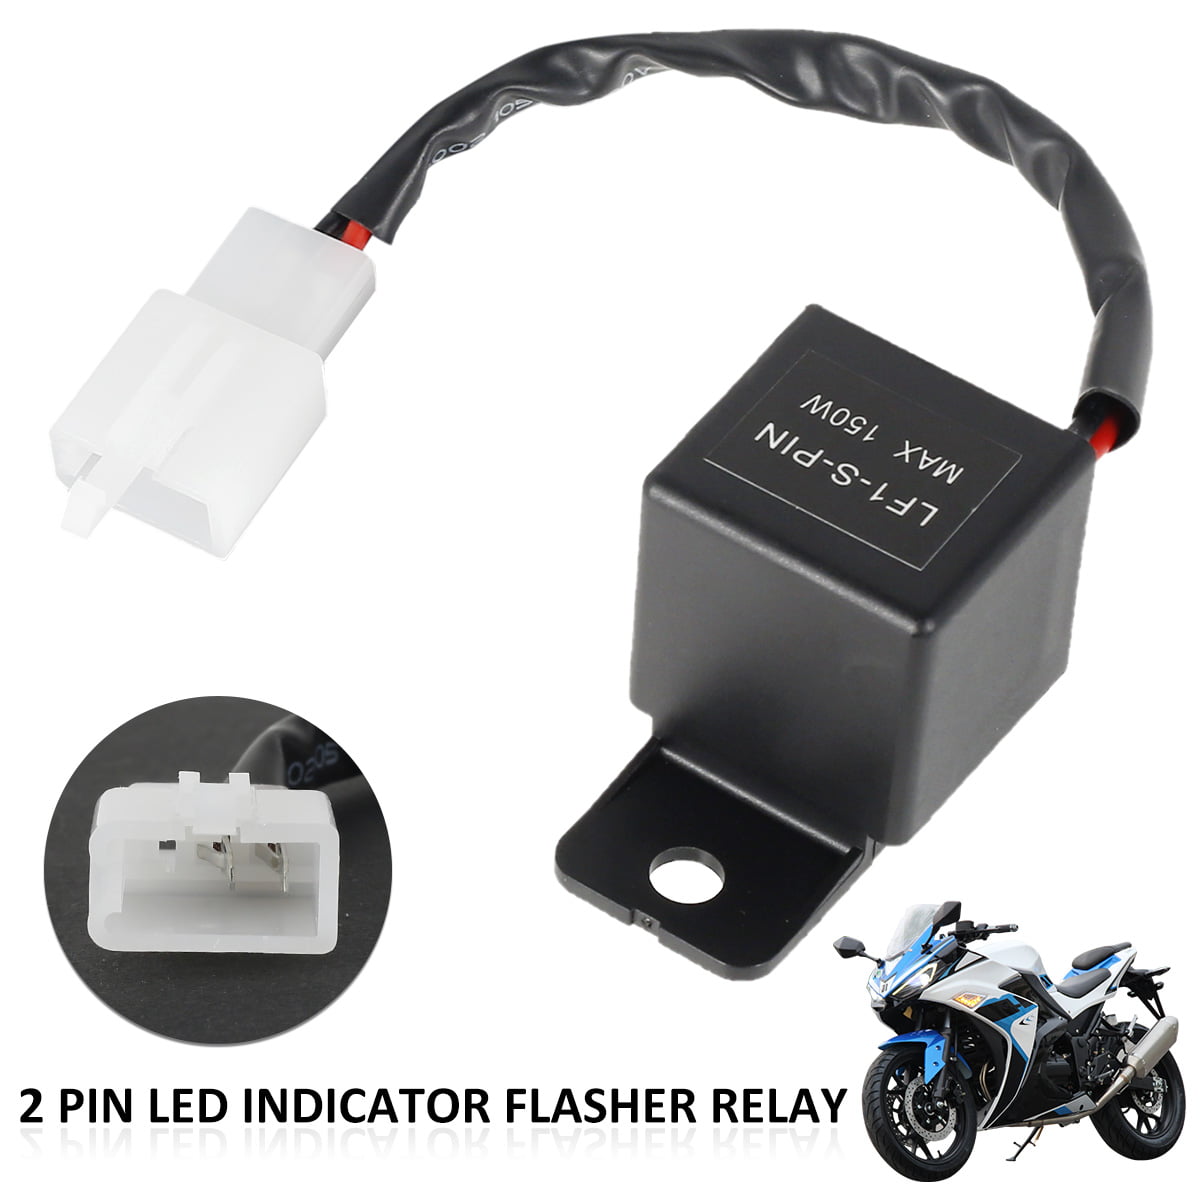 New Honda 4 Pin Indicator Relay for LED & Standard Type Indicators 